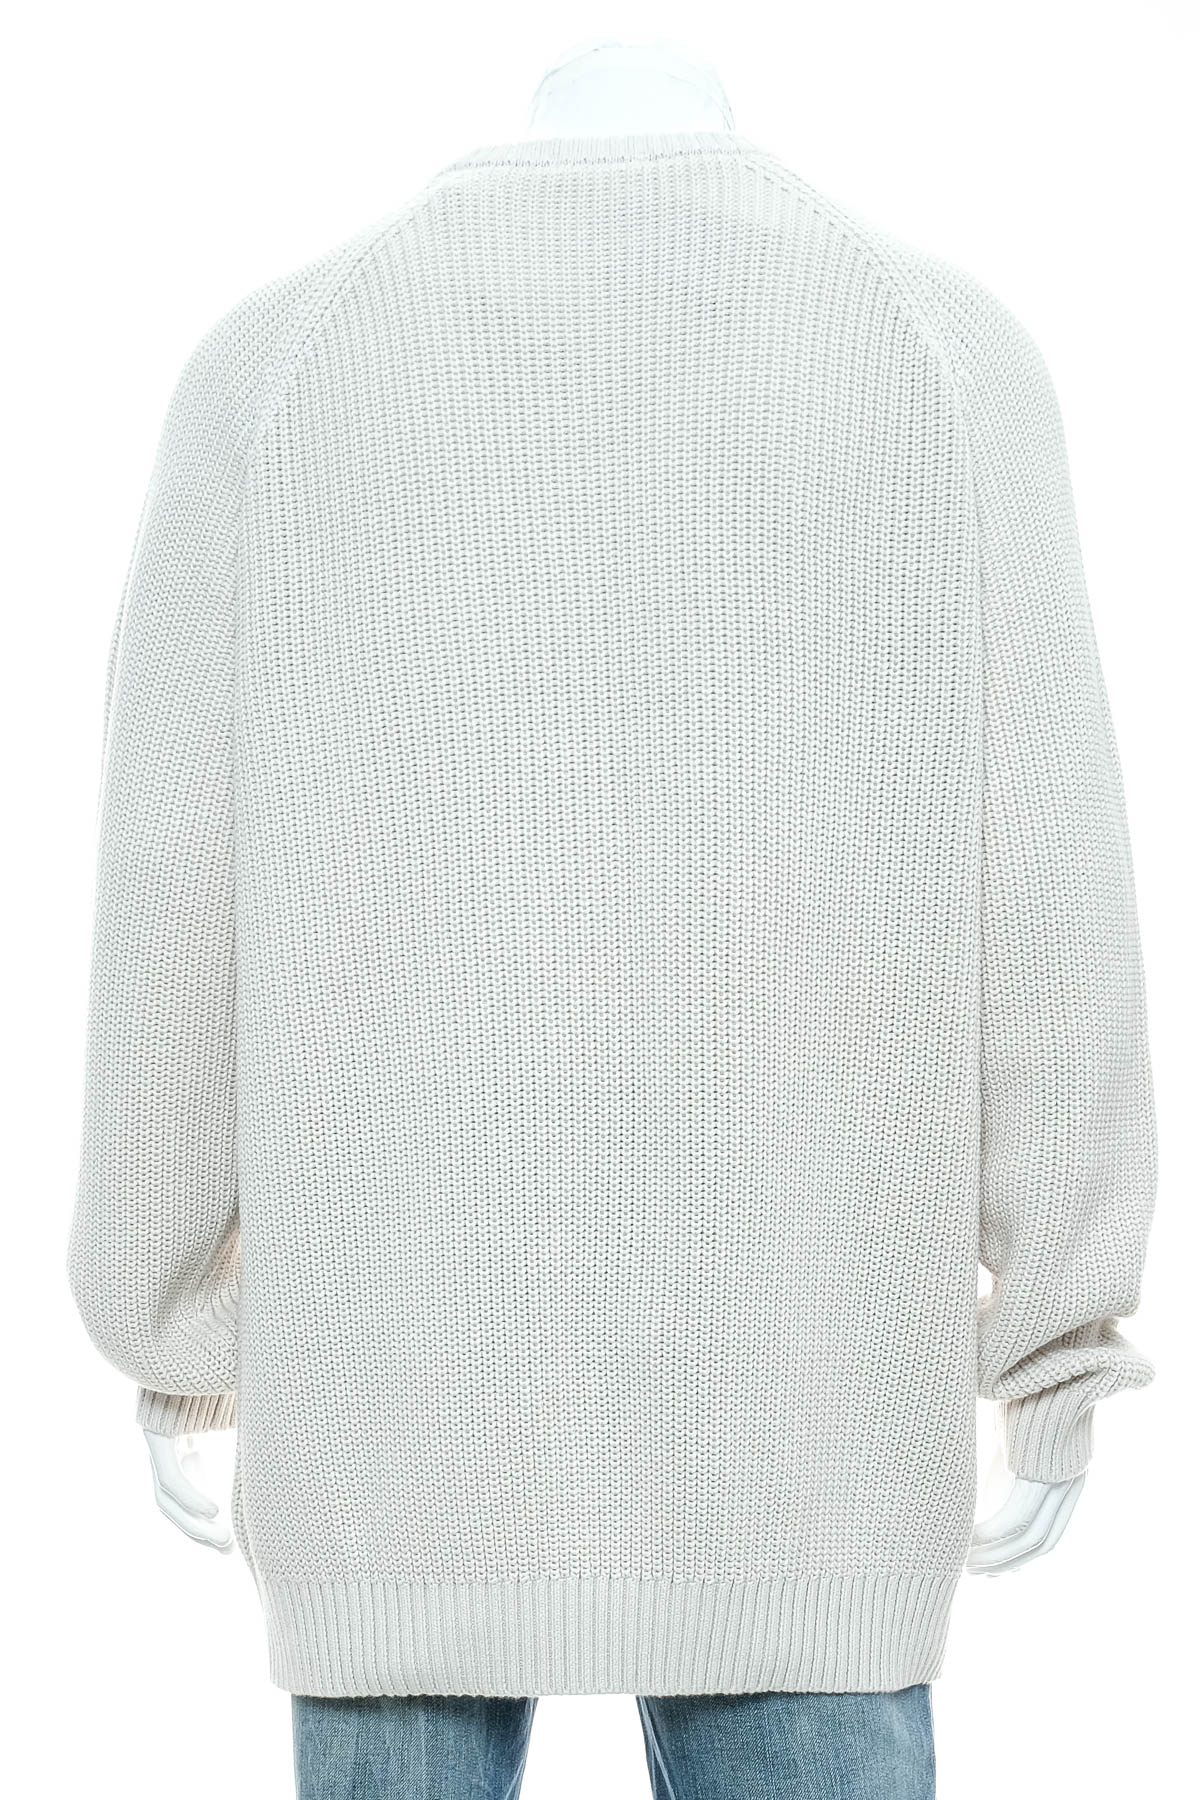 Men's sweater - Timberland - 1